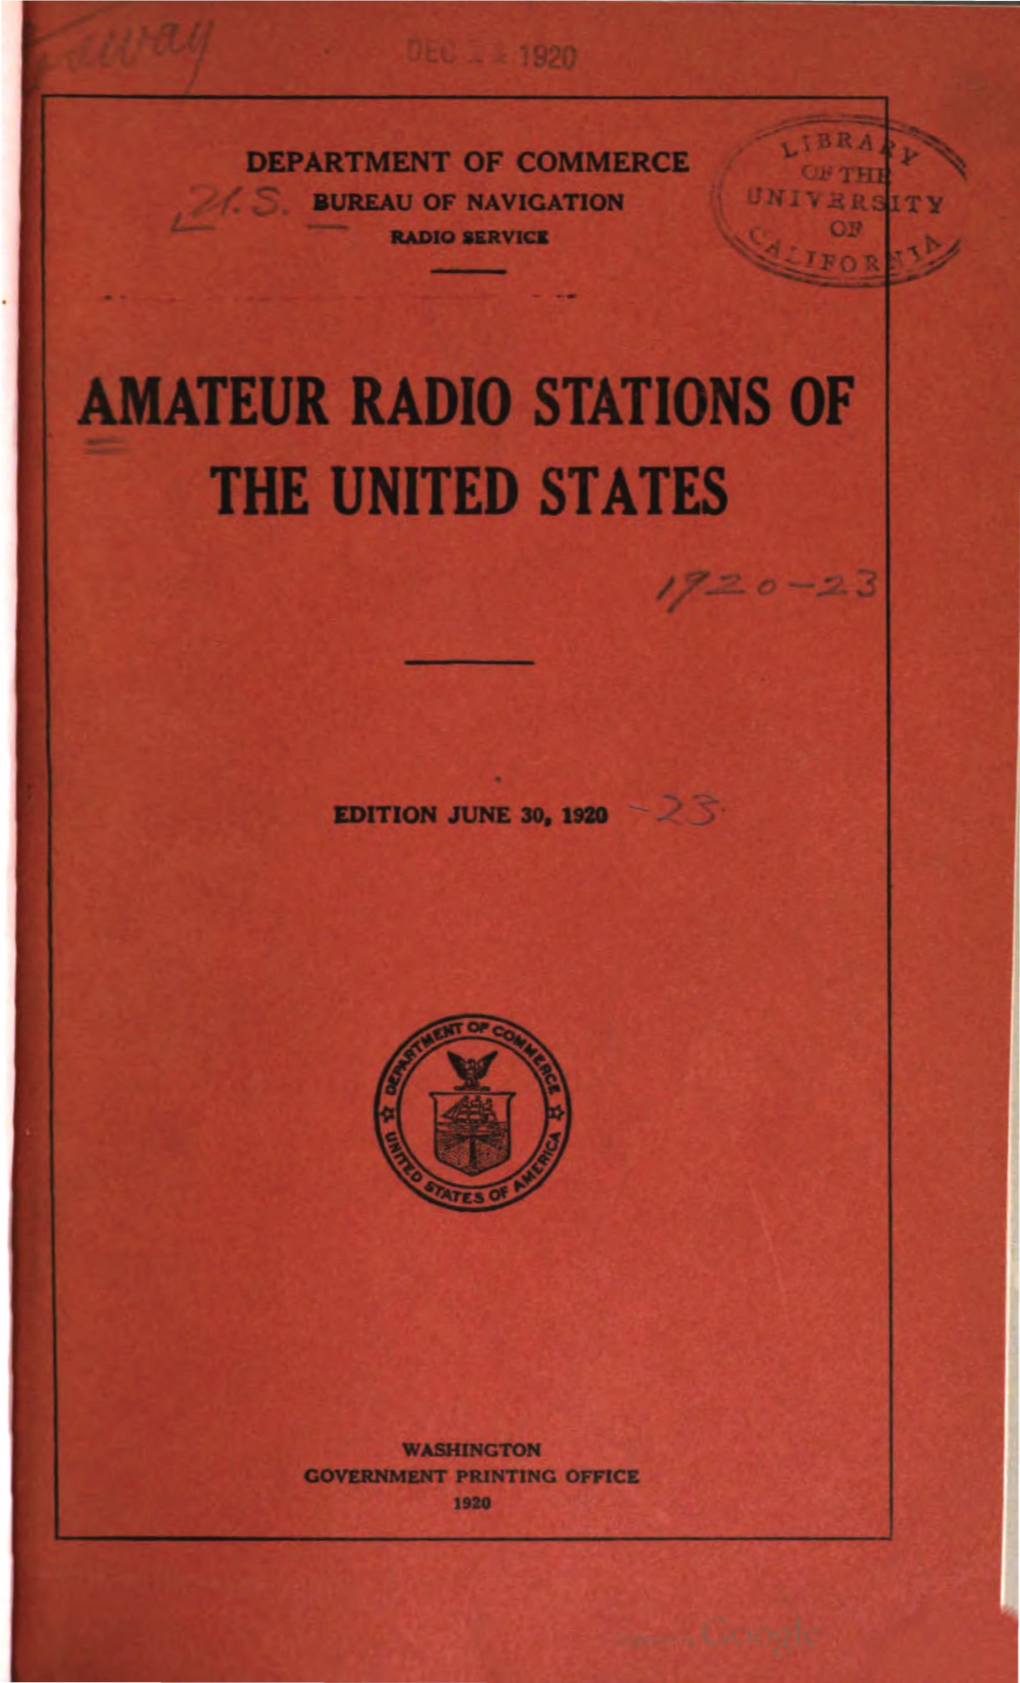 Amateur Radio Stations of the U.S